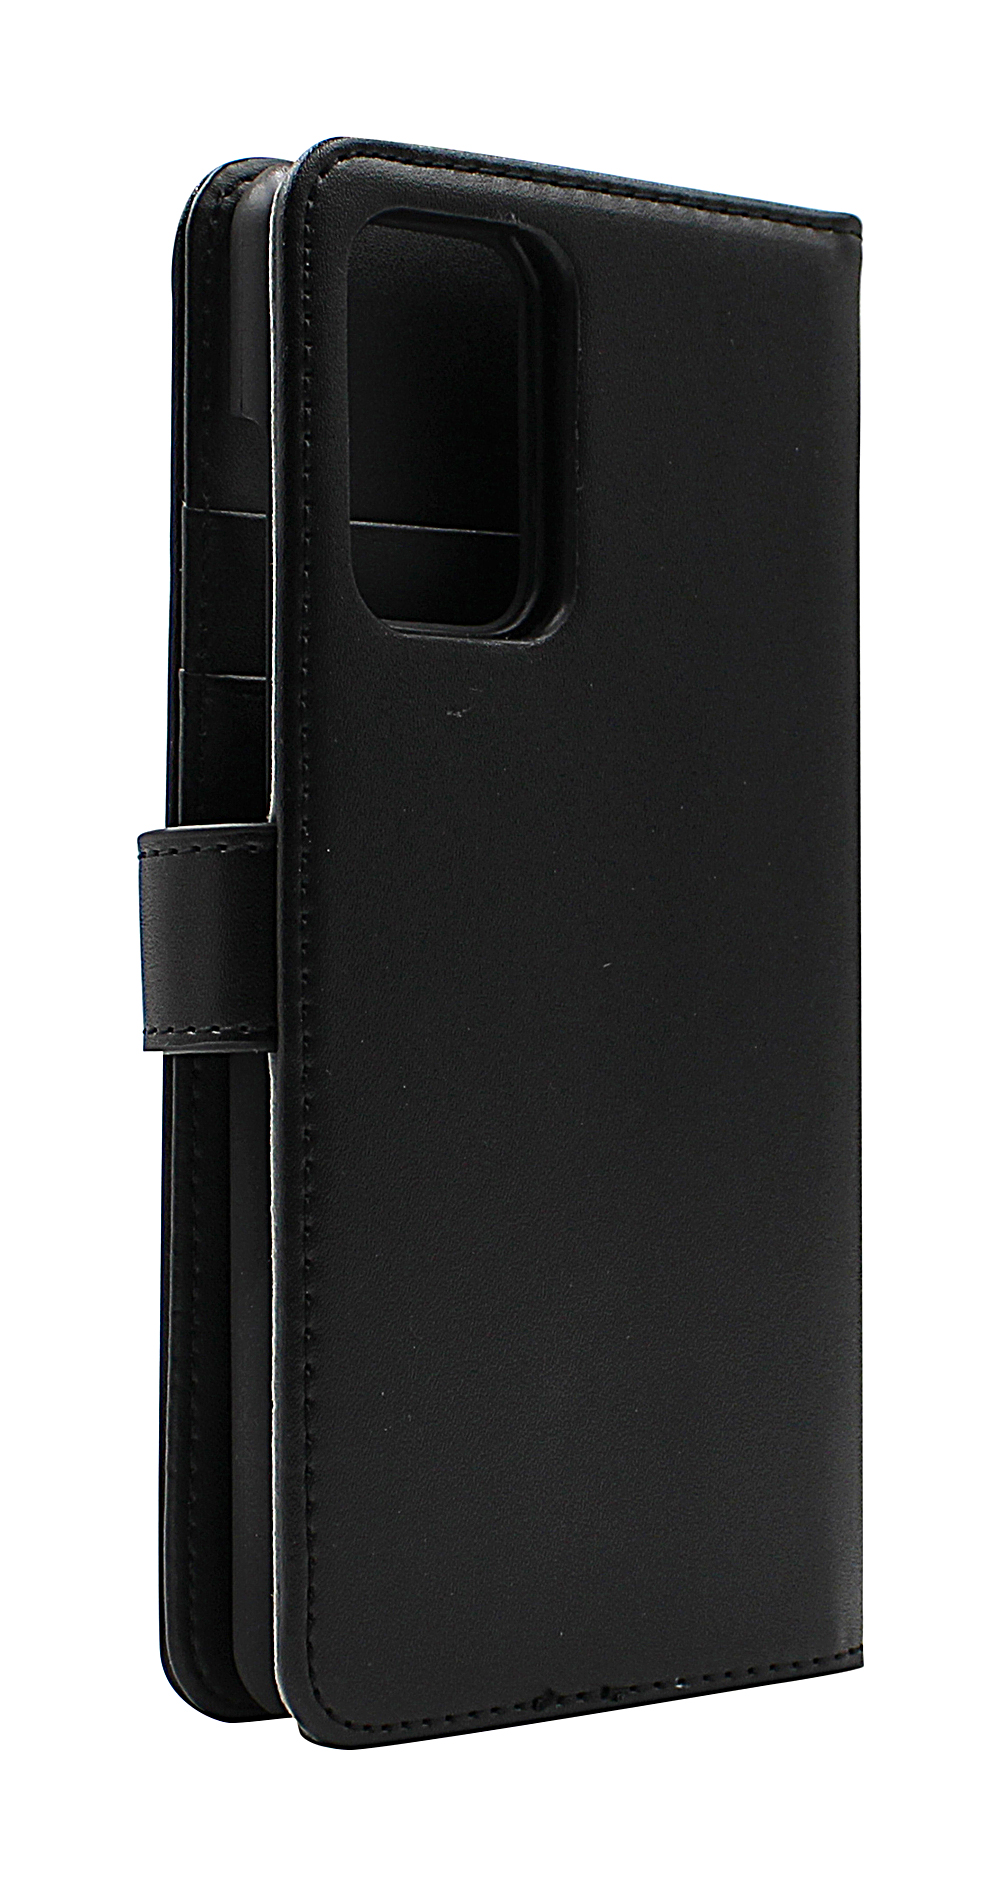 CoverInSkimblocker Magnet Fodral Samsung Galaxy A72 (A725F/DS)